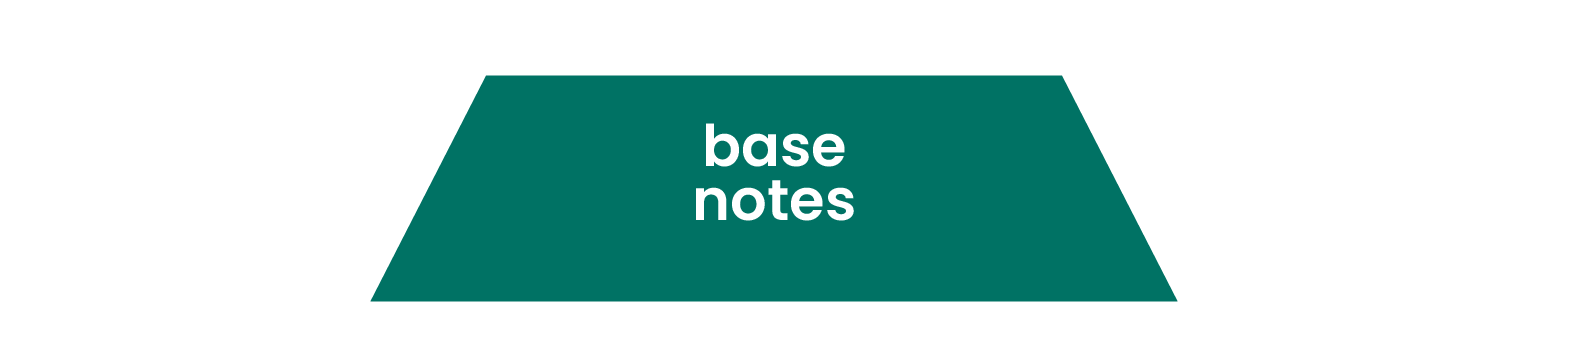 Base notes of a fragrance wheel.